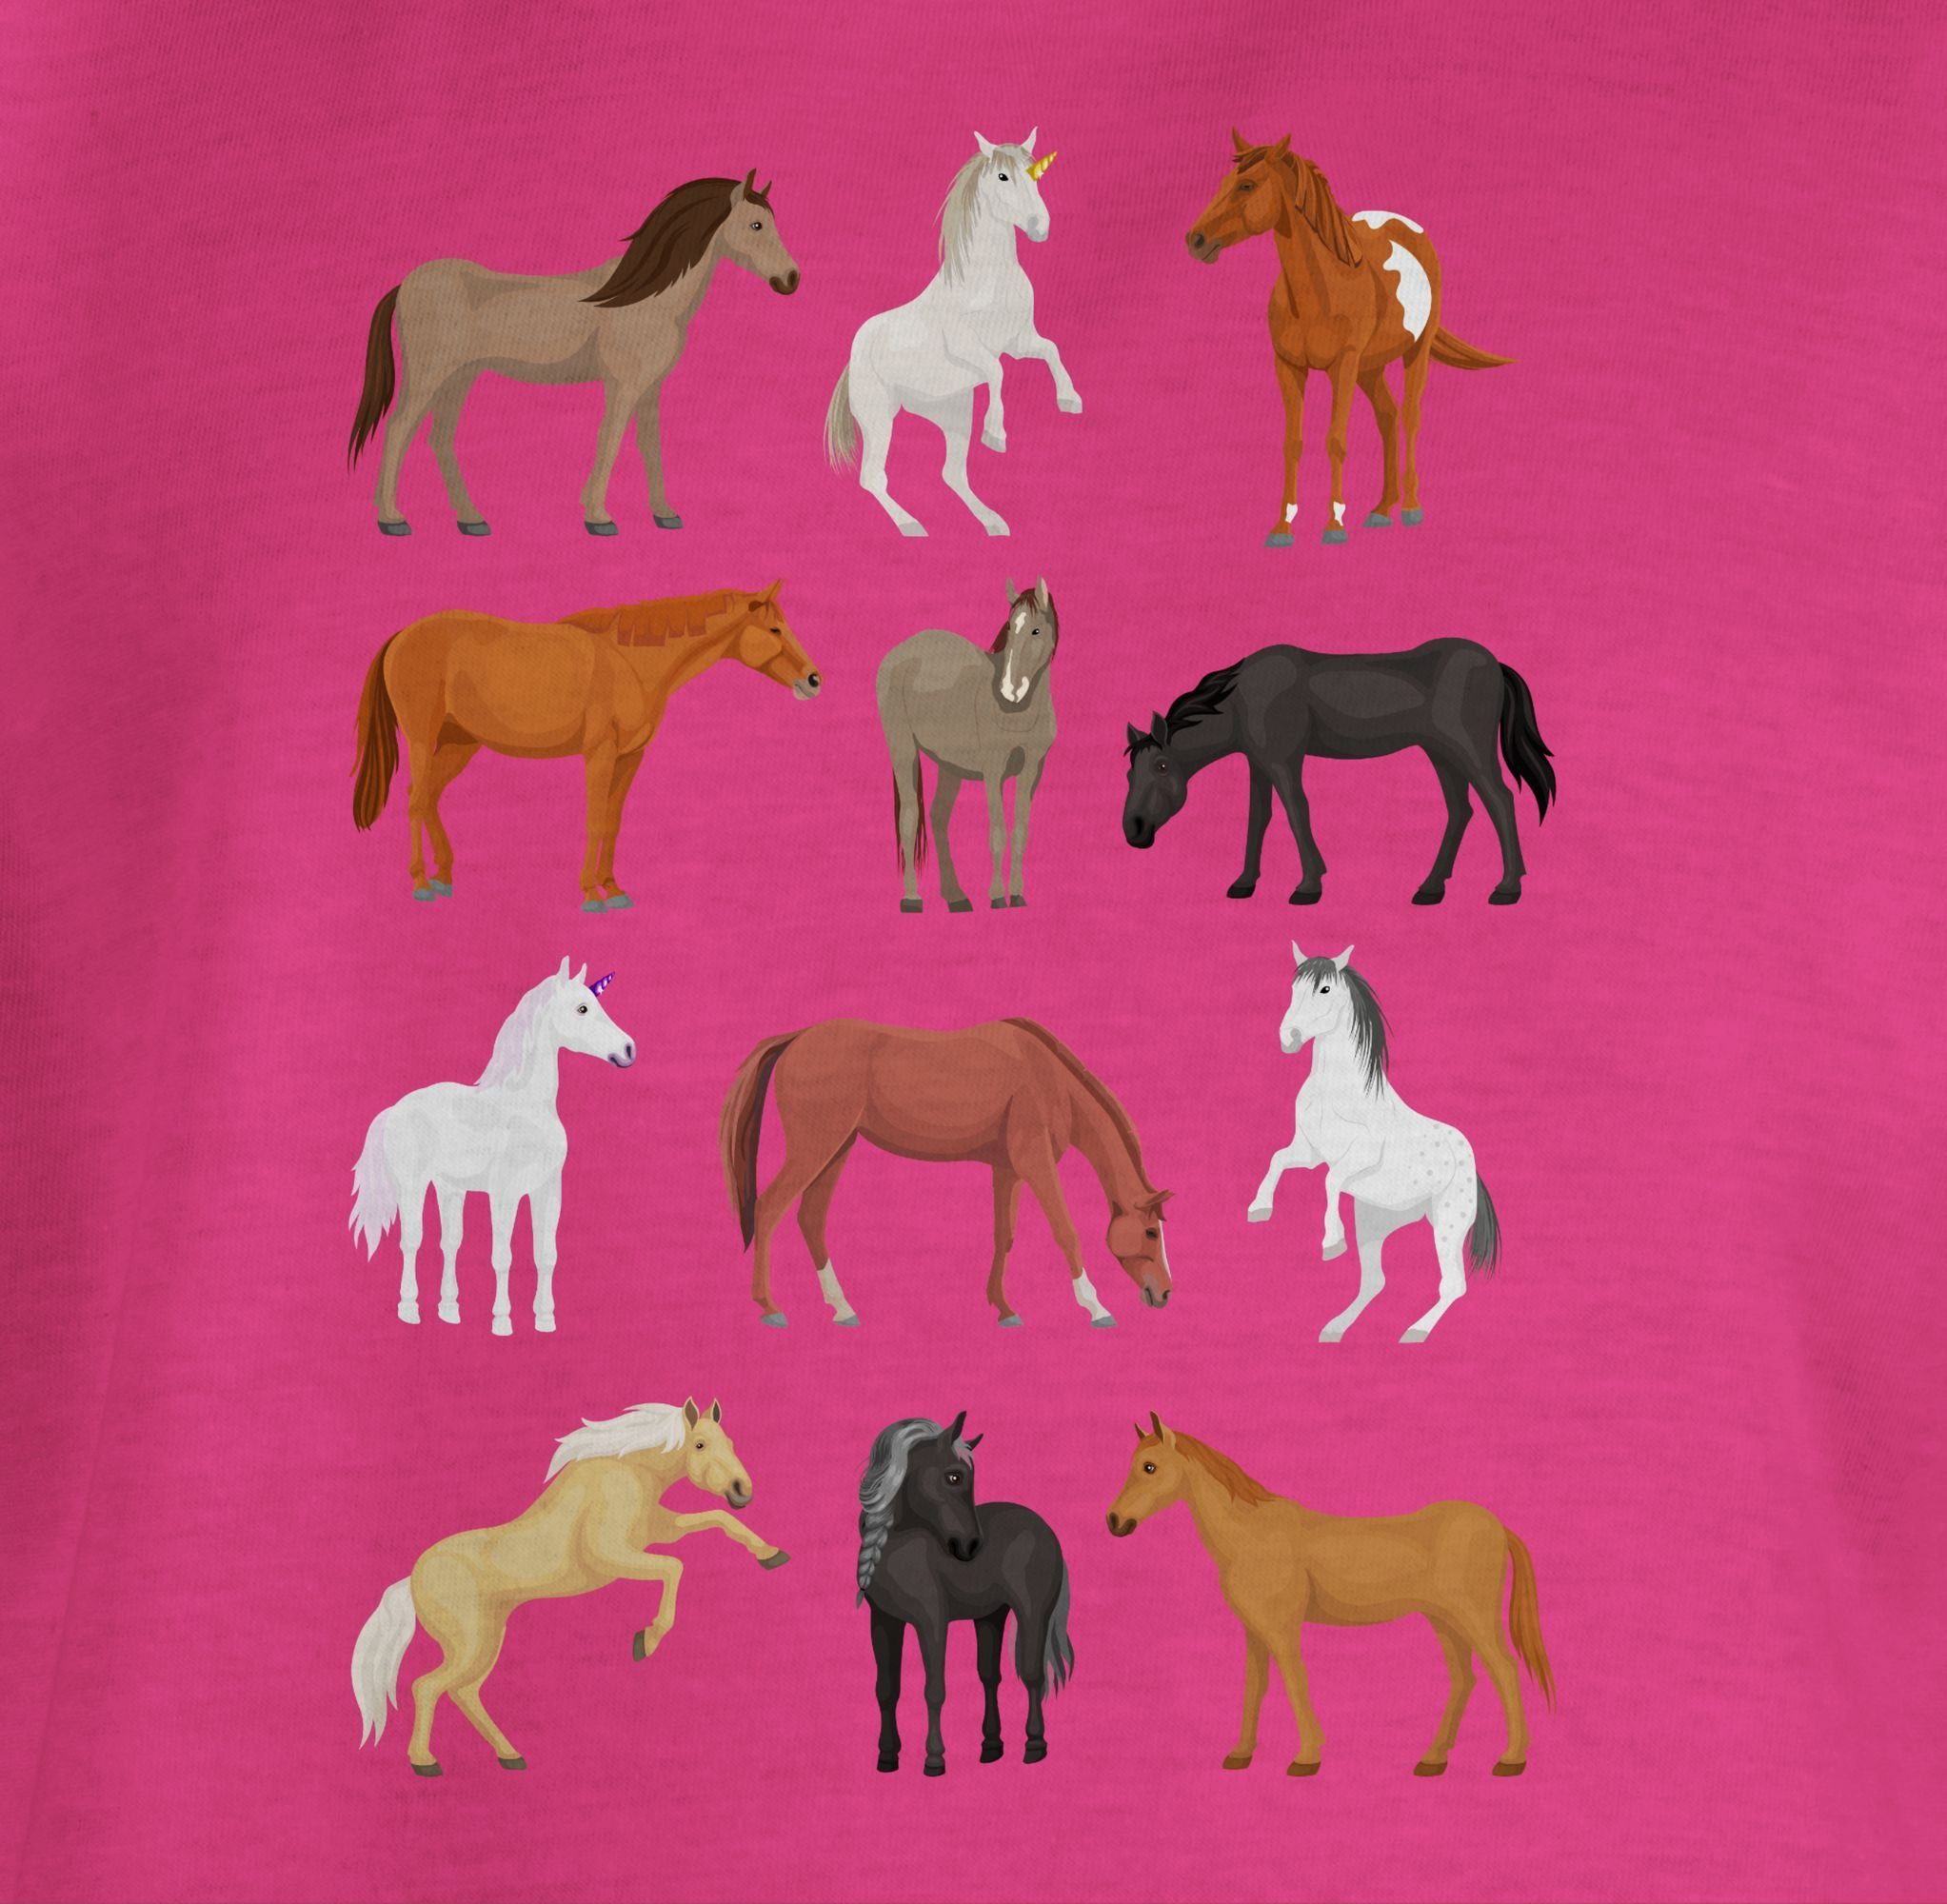 Shirtracer T-Shirt Pferde Fuchsia 2 Reihe Animal Print Tiermotiv